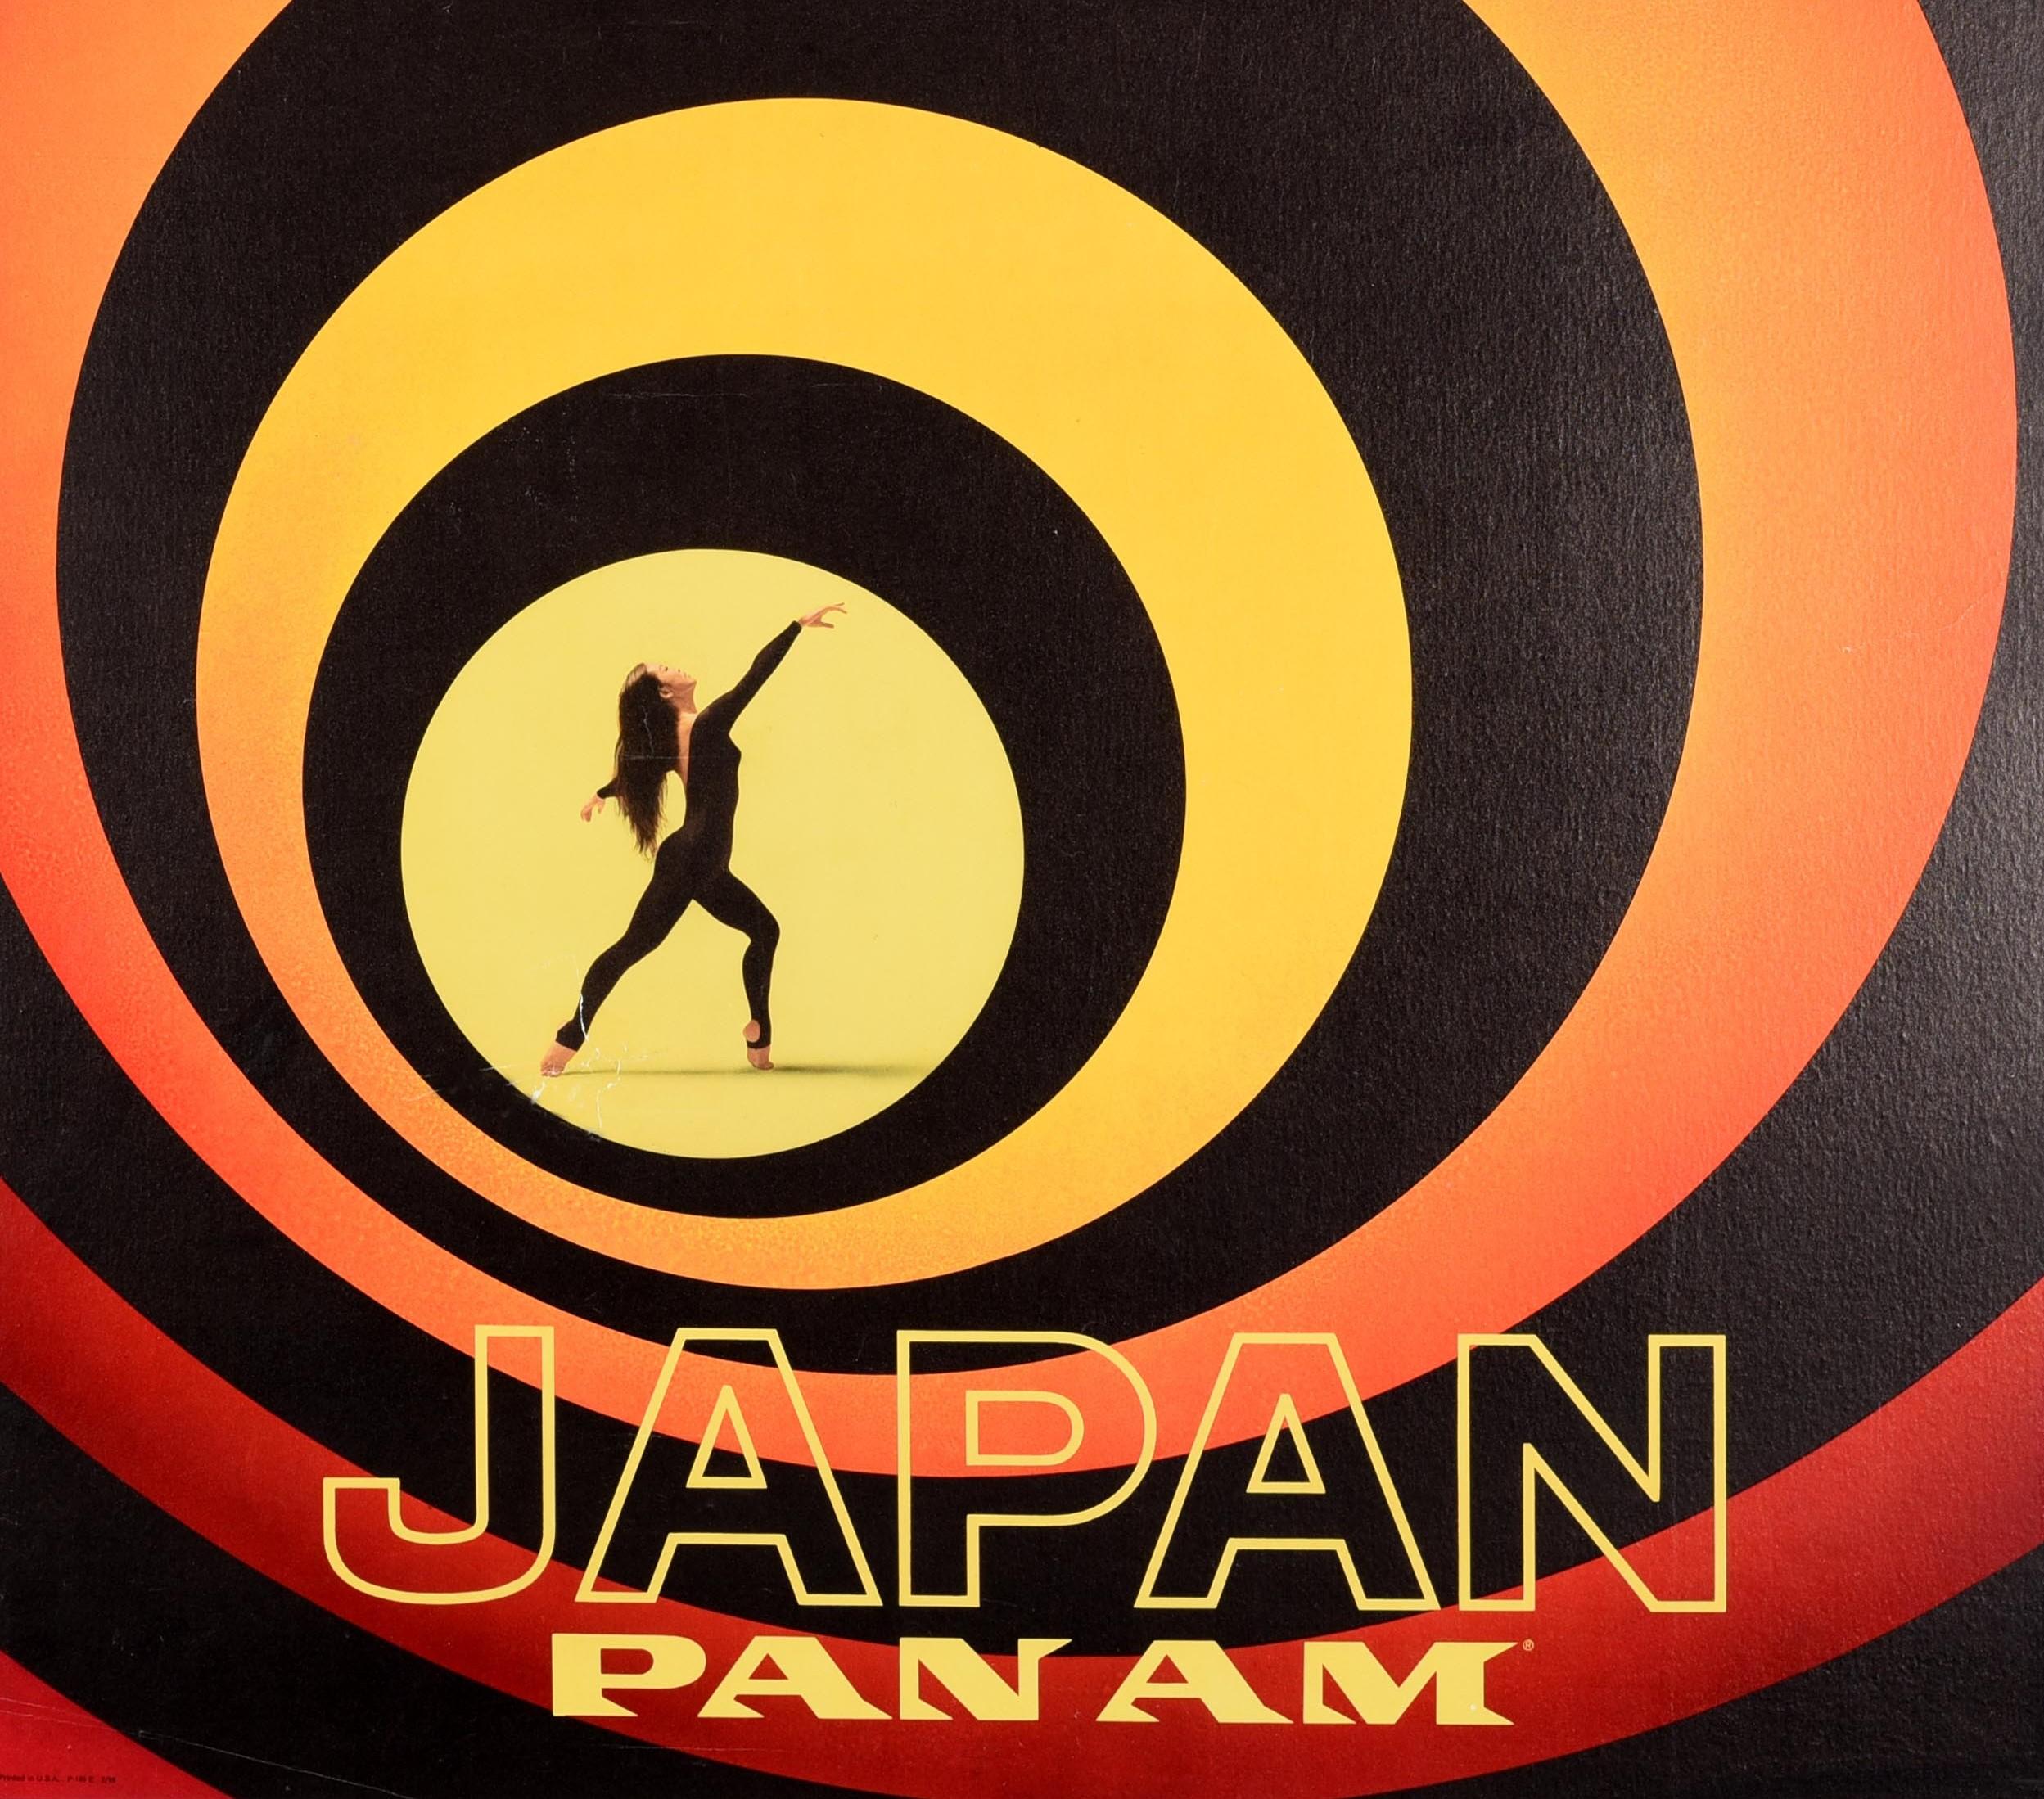 Original Vintage Poster Japan Pan Am Travel Art Dancer James Bond Style Design - Orange Print by Unknown